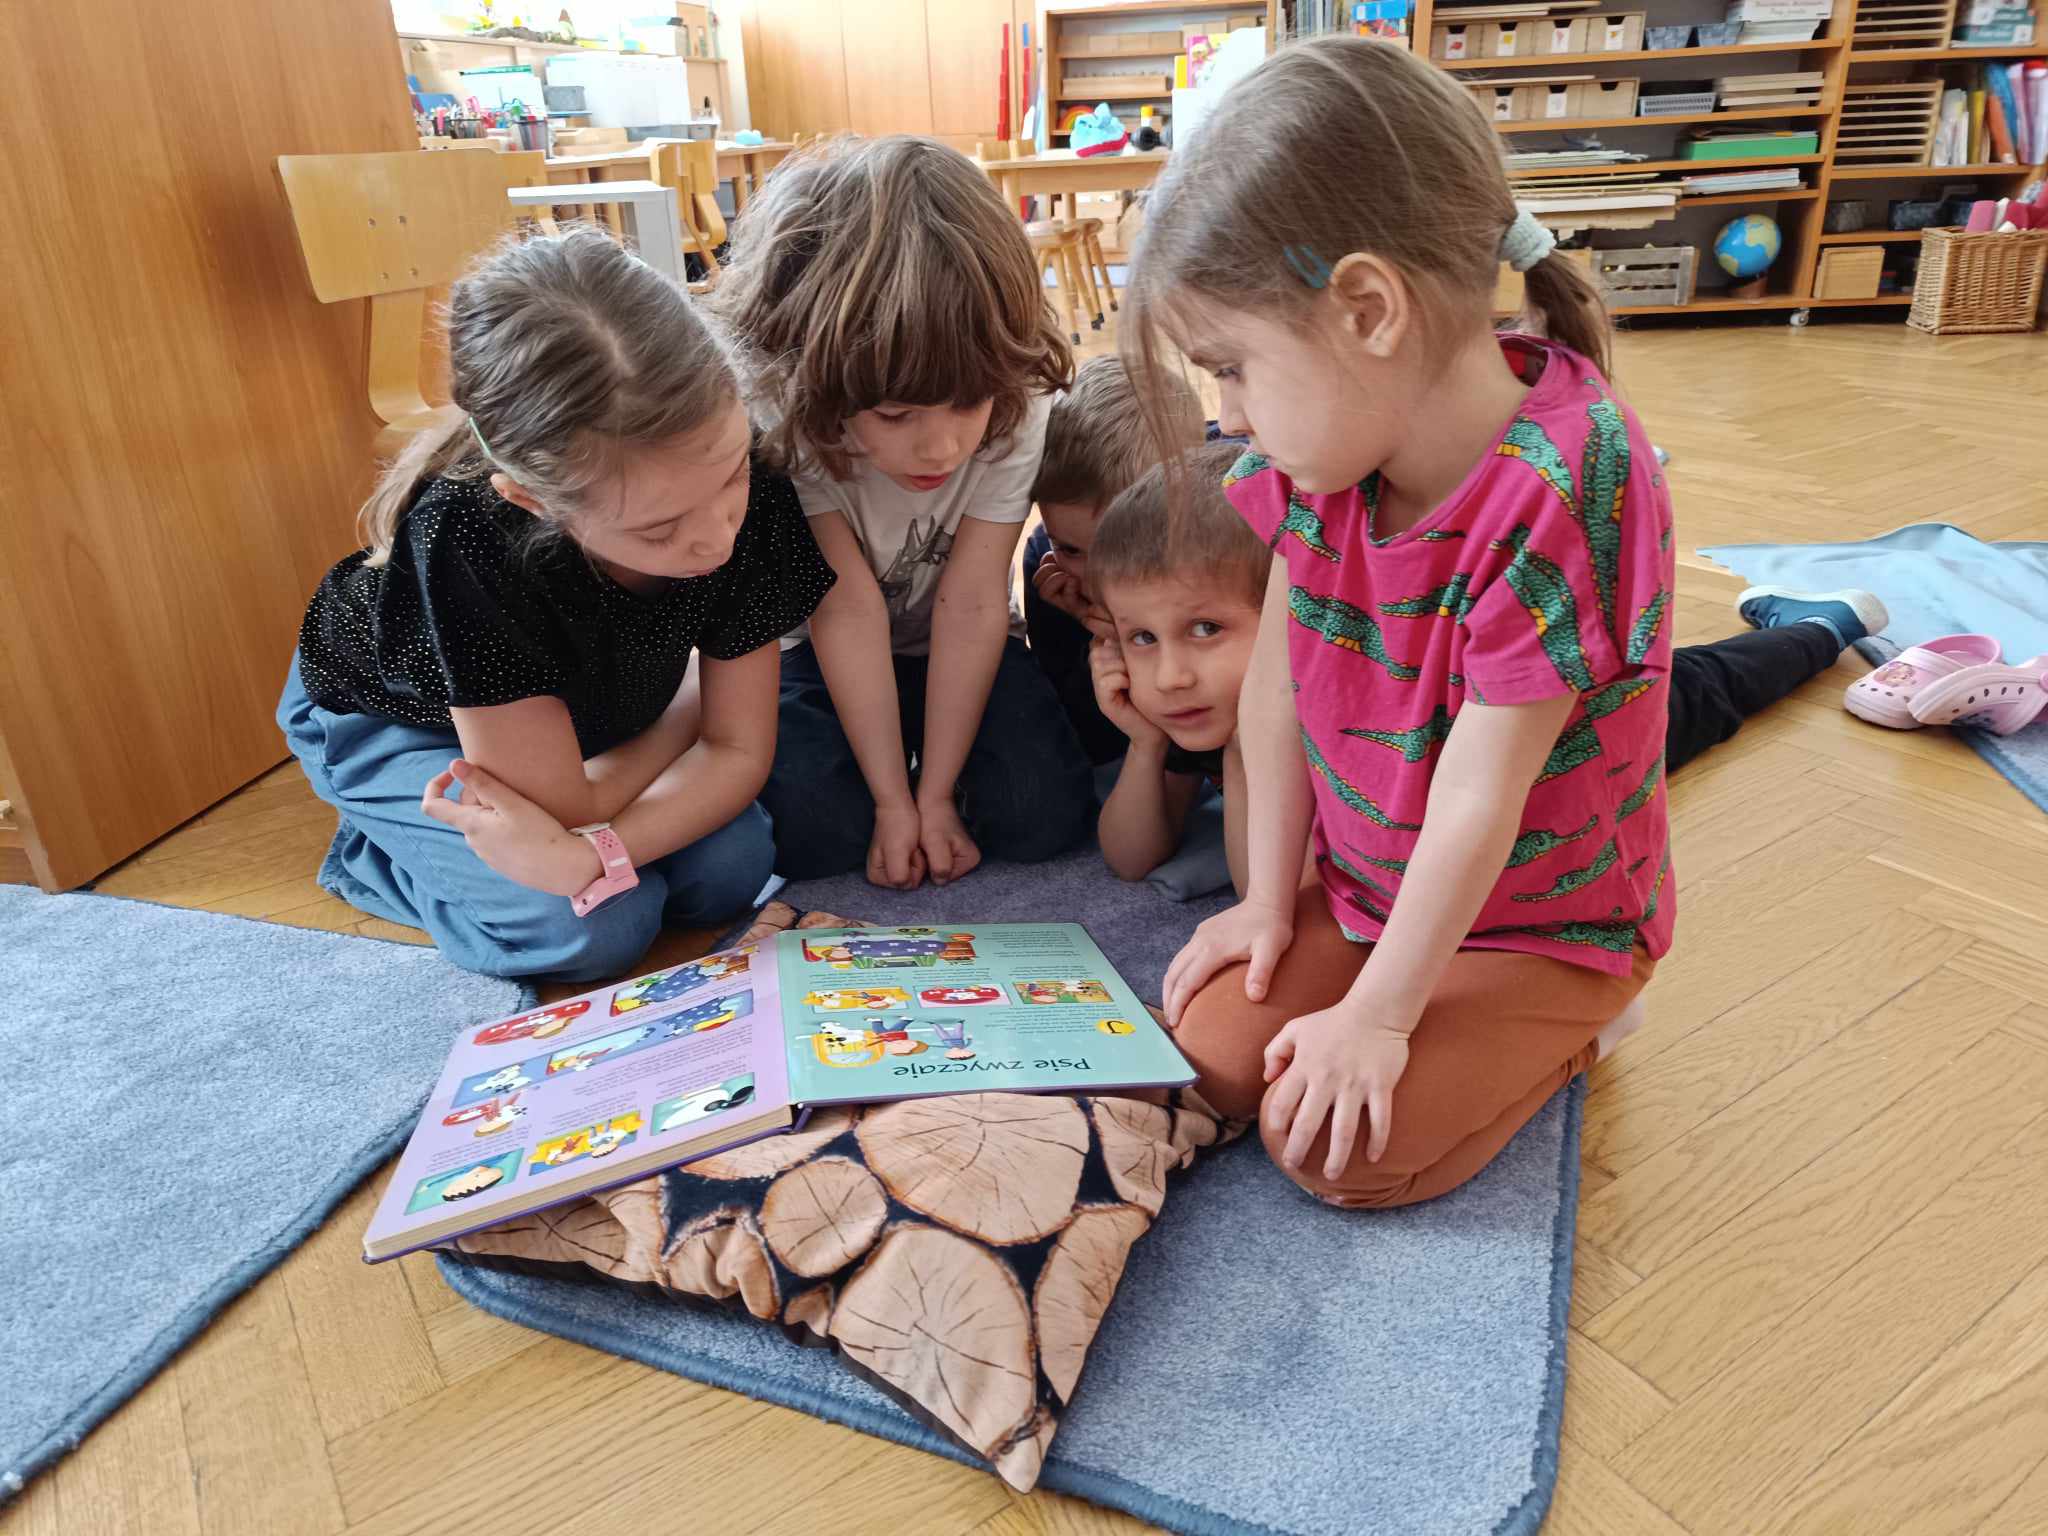 Cała Polska czyta dzieciom – grupa V